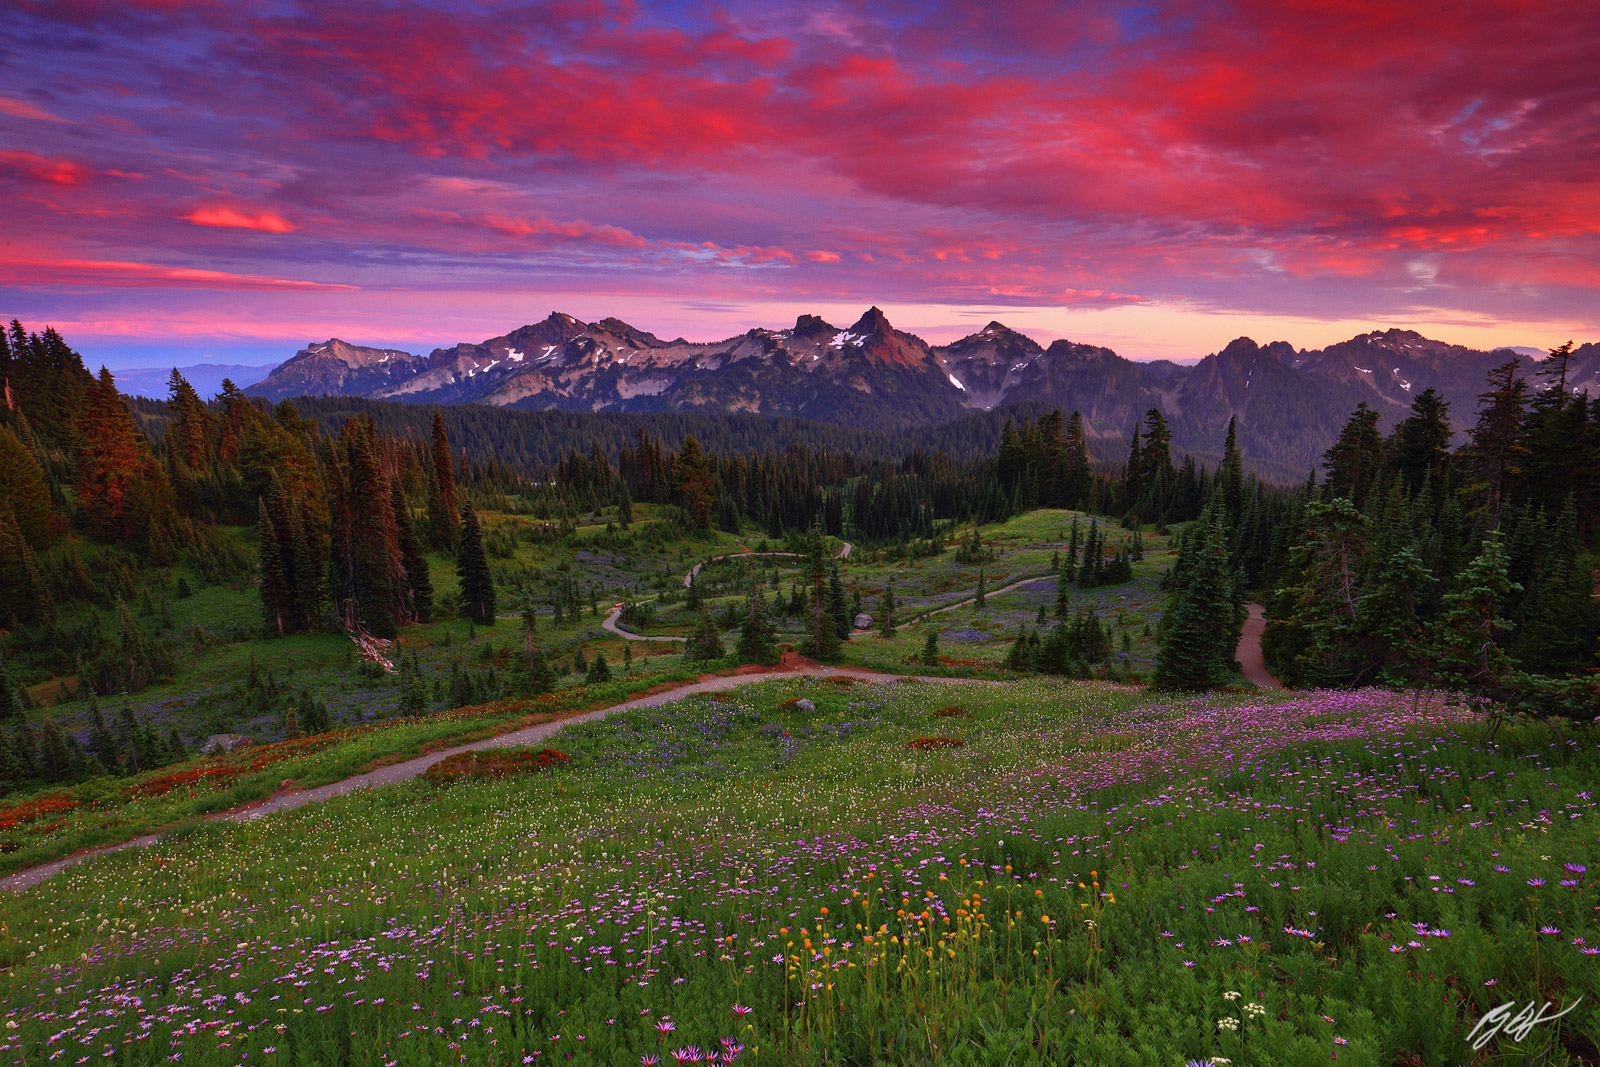 Sunset Wildflowers and the Tatoosh Range from Paradise Meadows, Mt Rainier National Park, Washington